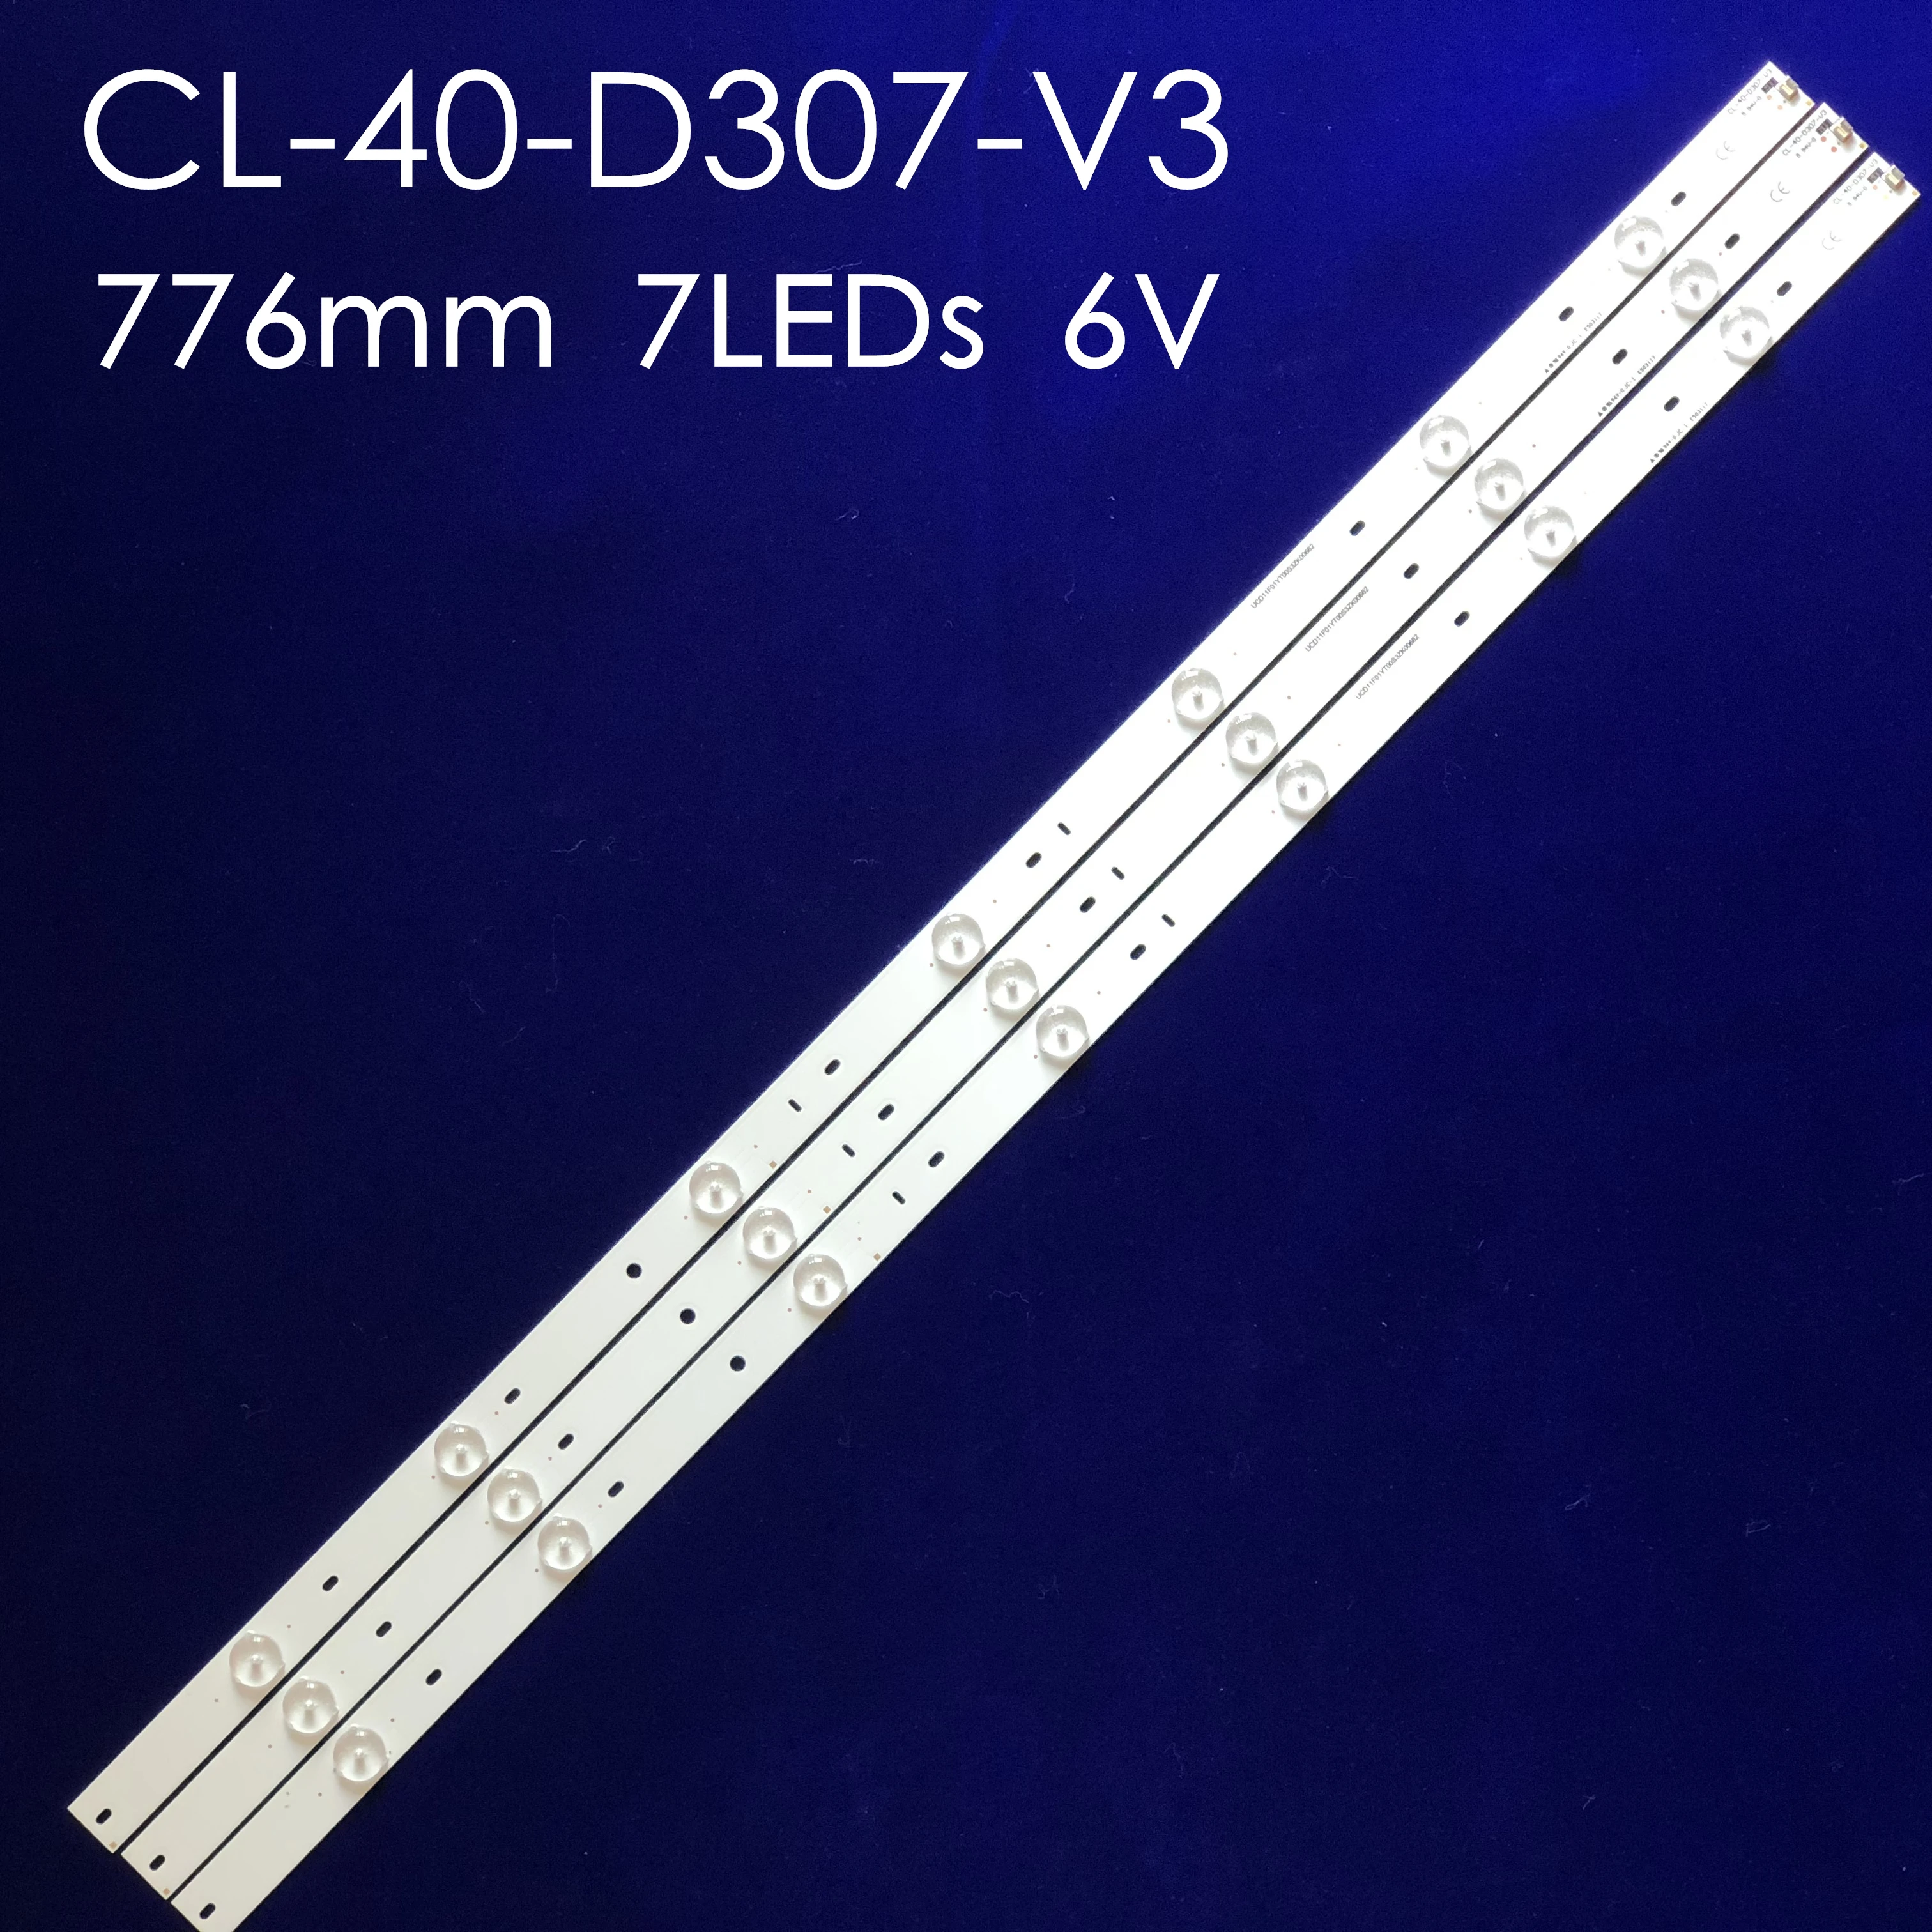 

30PCS LED Backlight strip For 40PFL5708/F7 40PFL3188 40PFL3188 40PFG4109 40PHG4109 40PFT4109/60 40PFL3088H CL-40-D307-V3